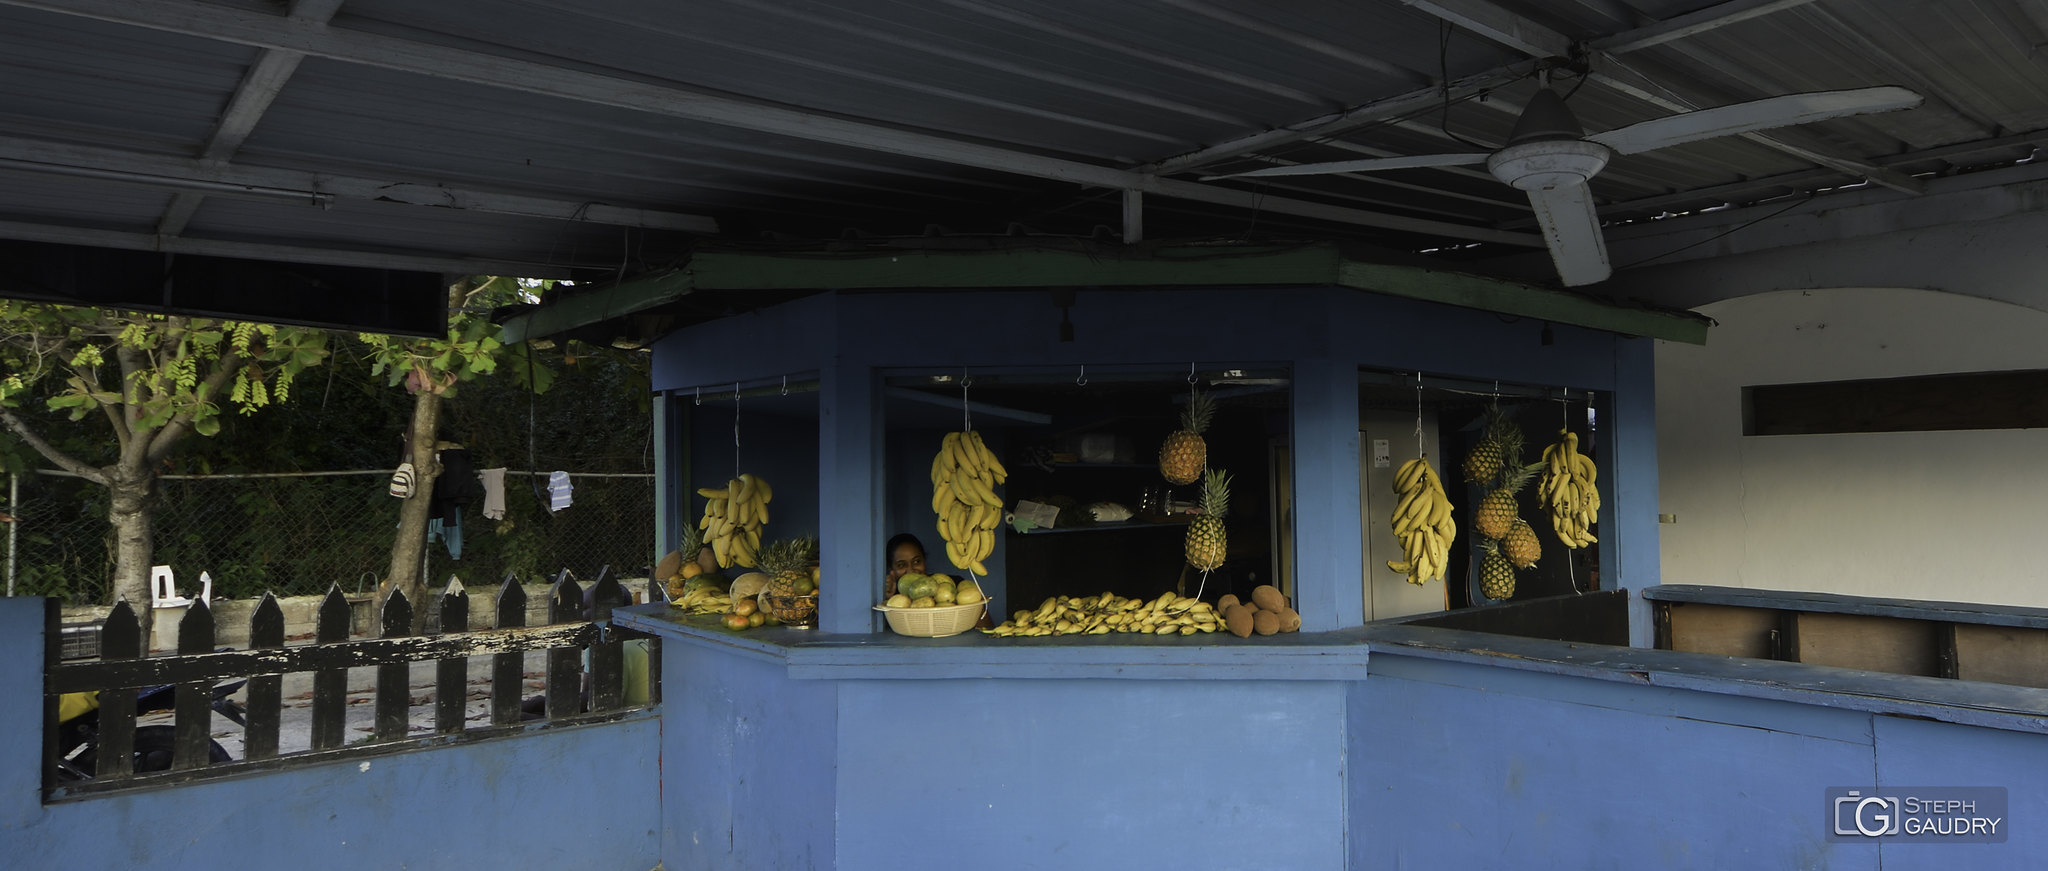 Bleu/jaune - les bananes [Klik om de diavoorstelling te starten]